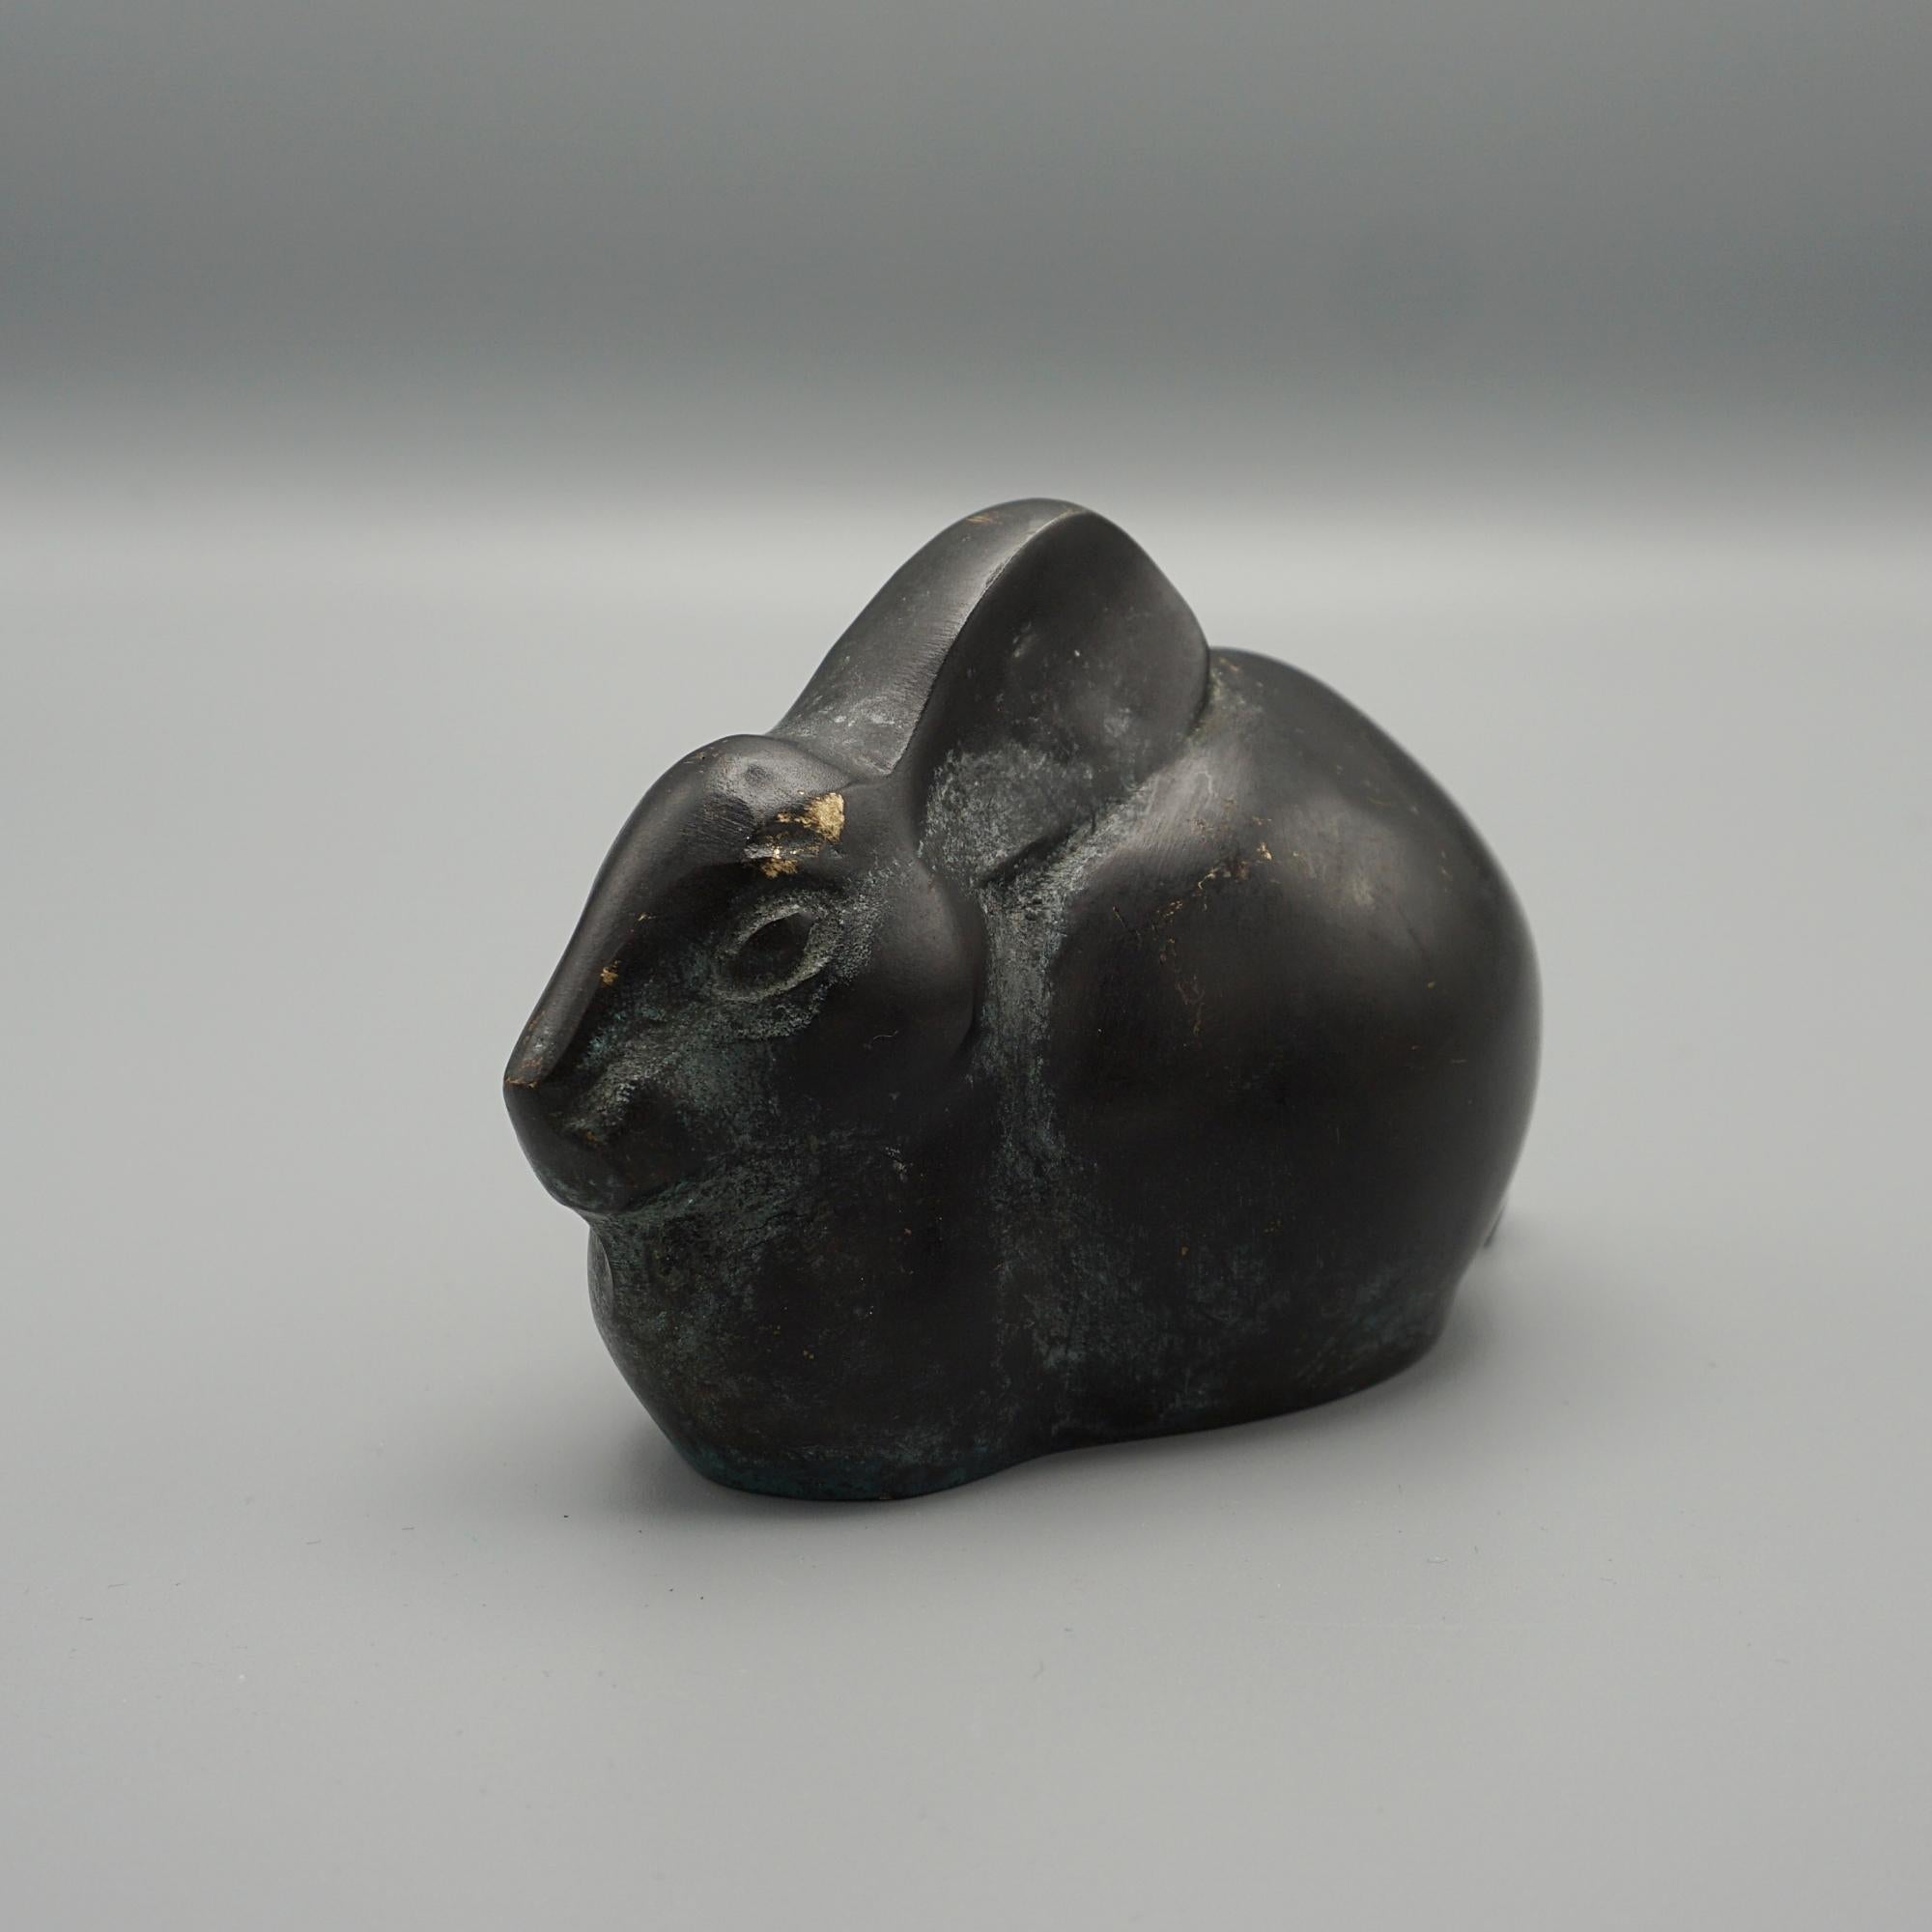 An early 20th century bronze rabbit. Excellent deep patination.

Dimensions: H 8cm W 13cm D 7cm 

Origin: Japanese

Date: Circa 1910

Item Number: 1803241